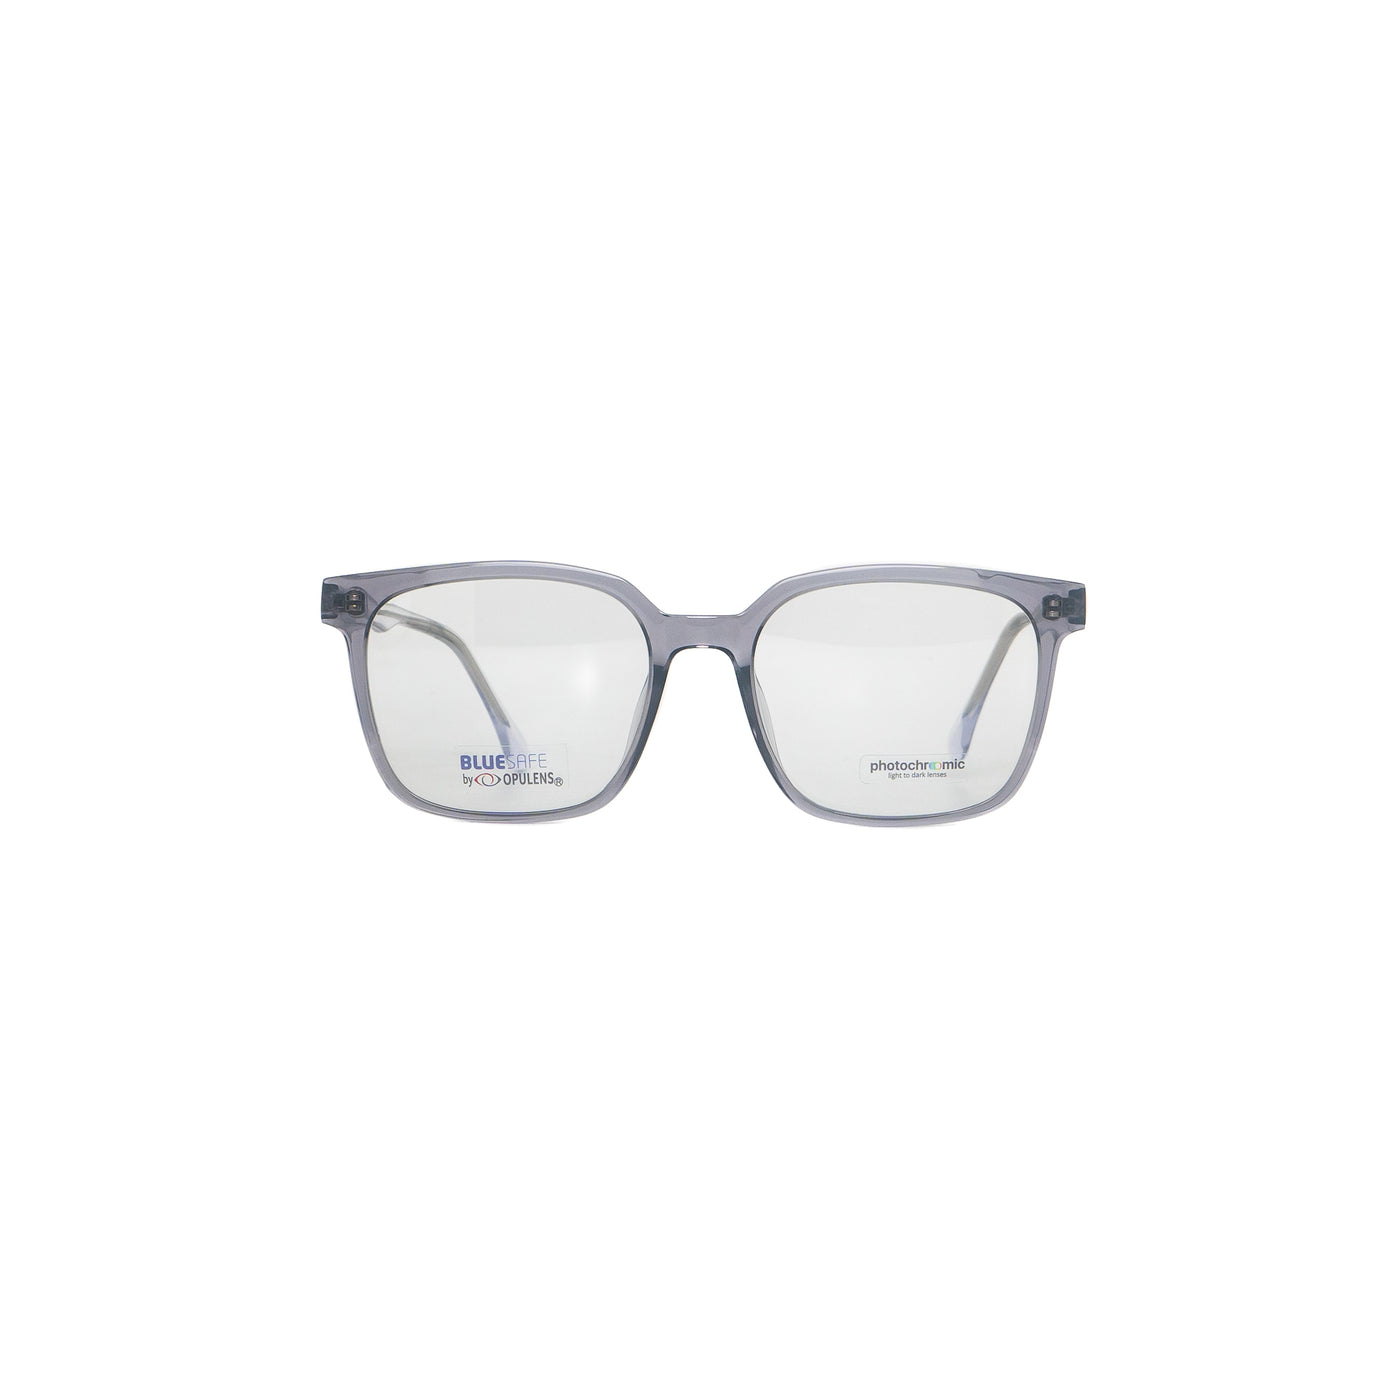 Tony Morgan TM60006C454PURP | Eyeglasses - Vision Express Optical Philippines